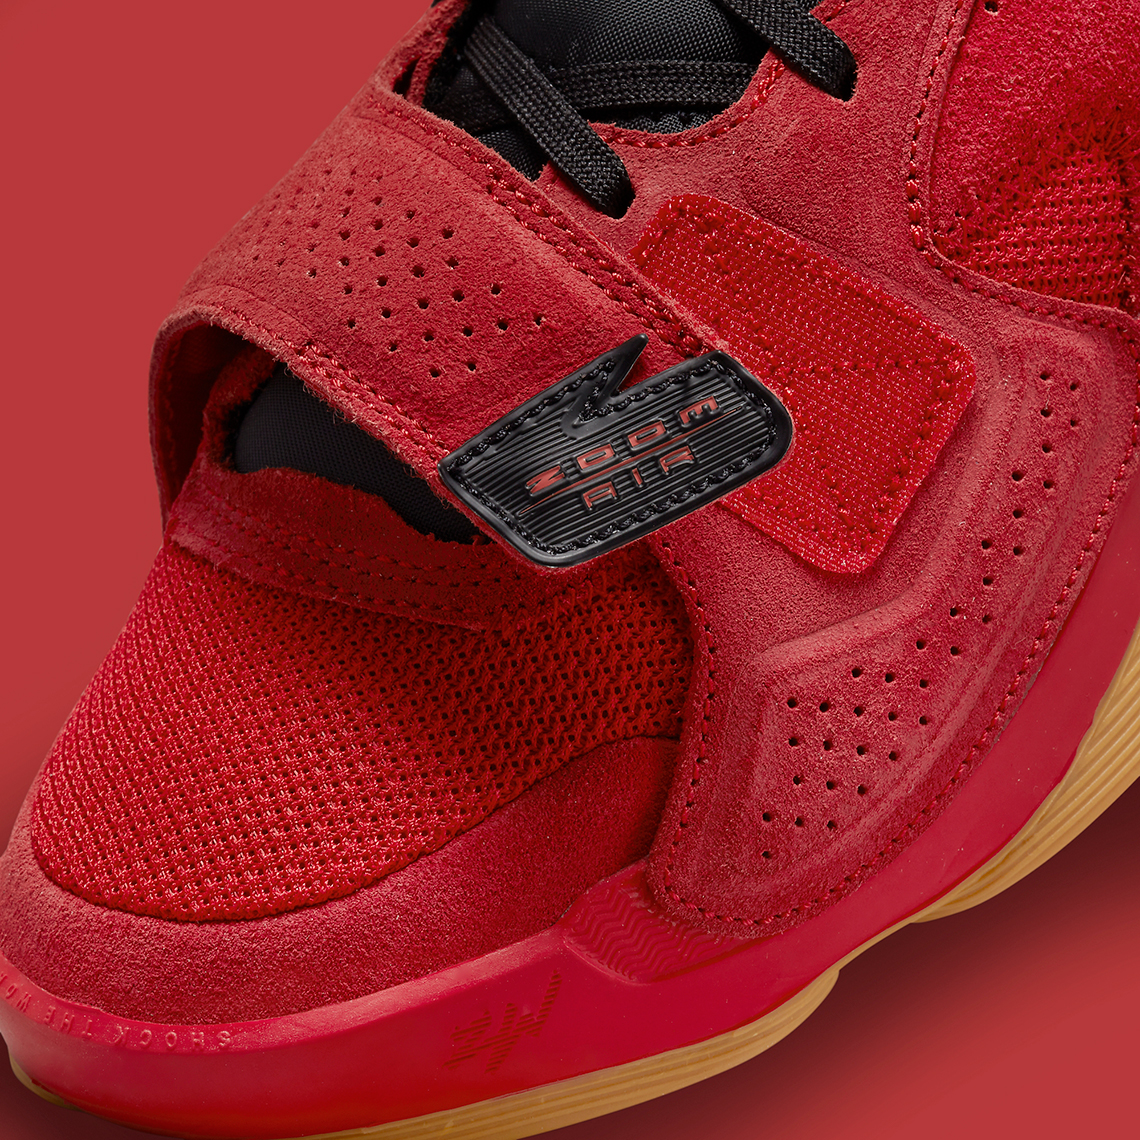 Jordan Brand will be releasing more kids exclusive Air Jordans in 2018